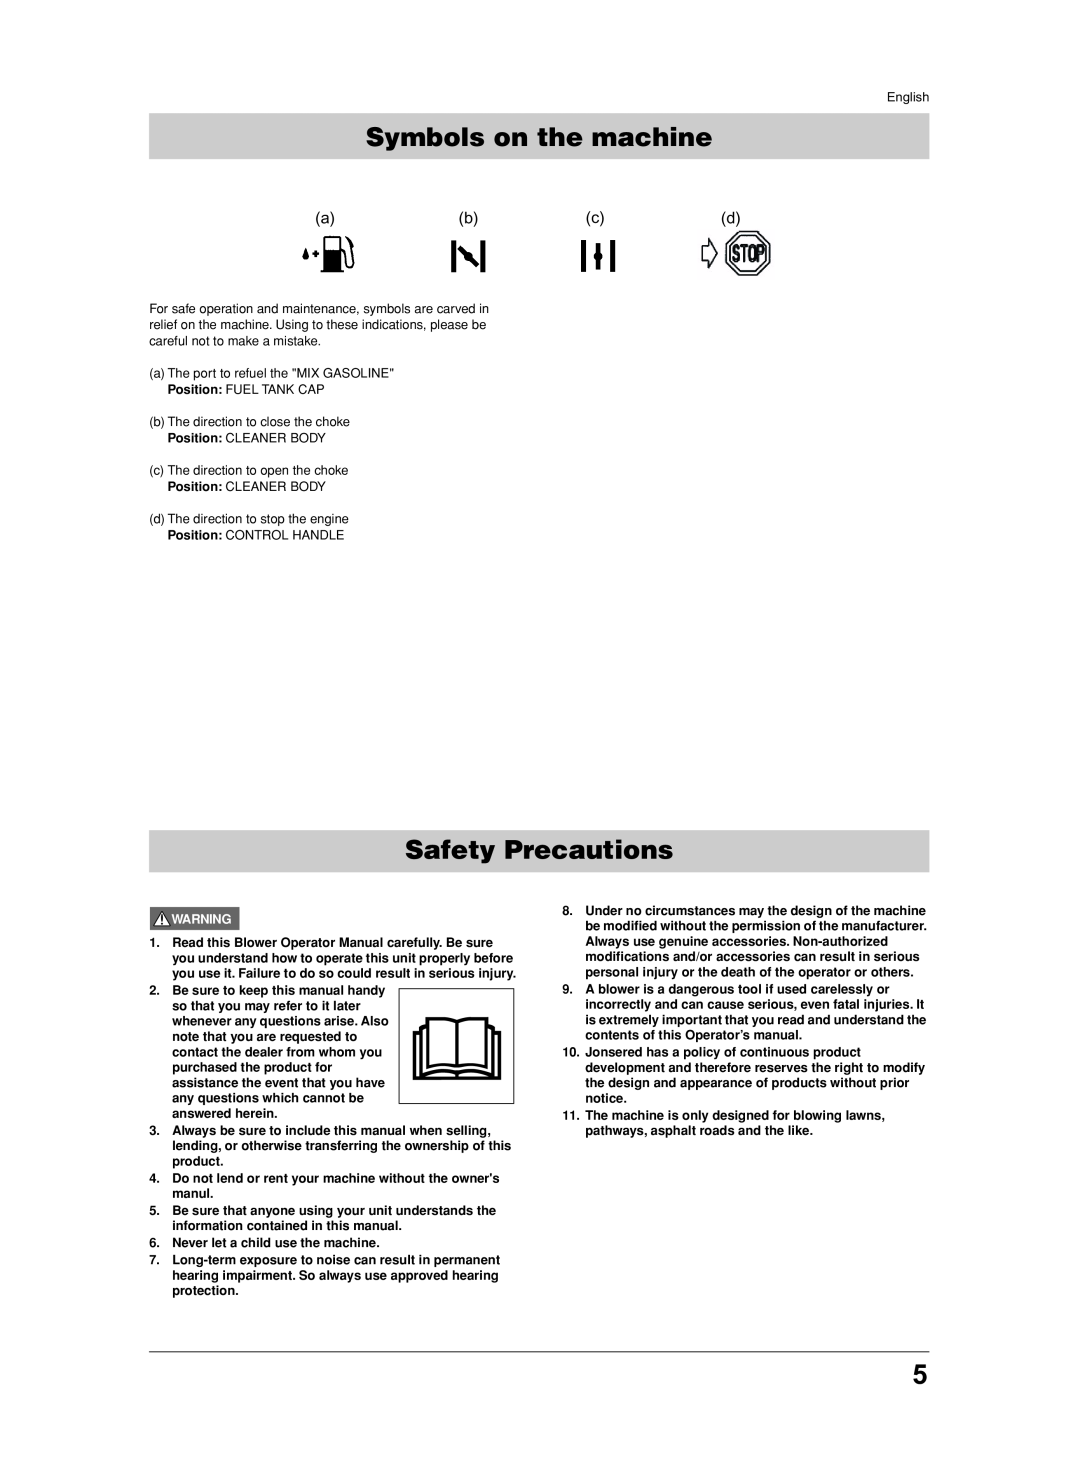 Jonsered BB2250 manual Symbols on the machine, Safety Precautions 